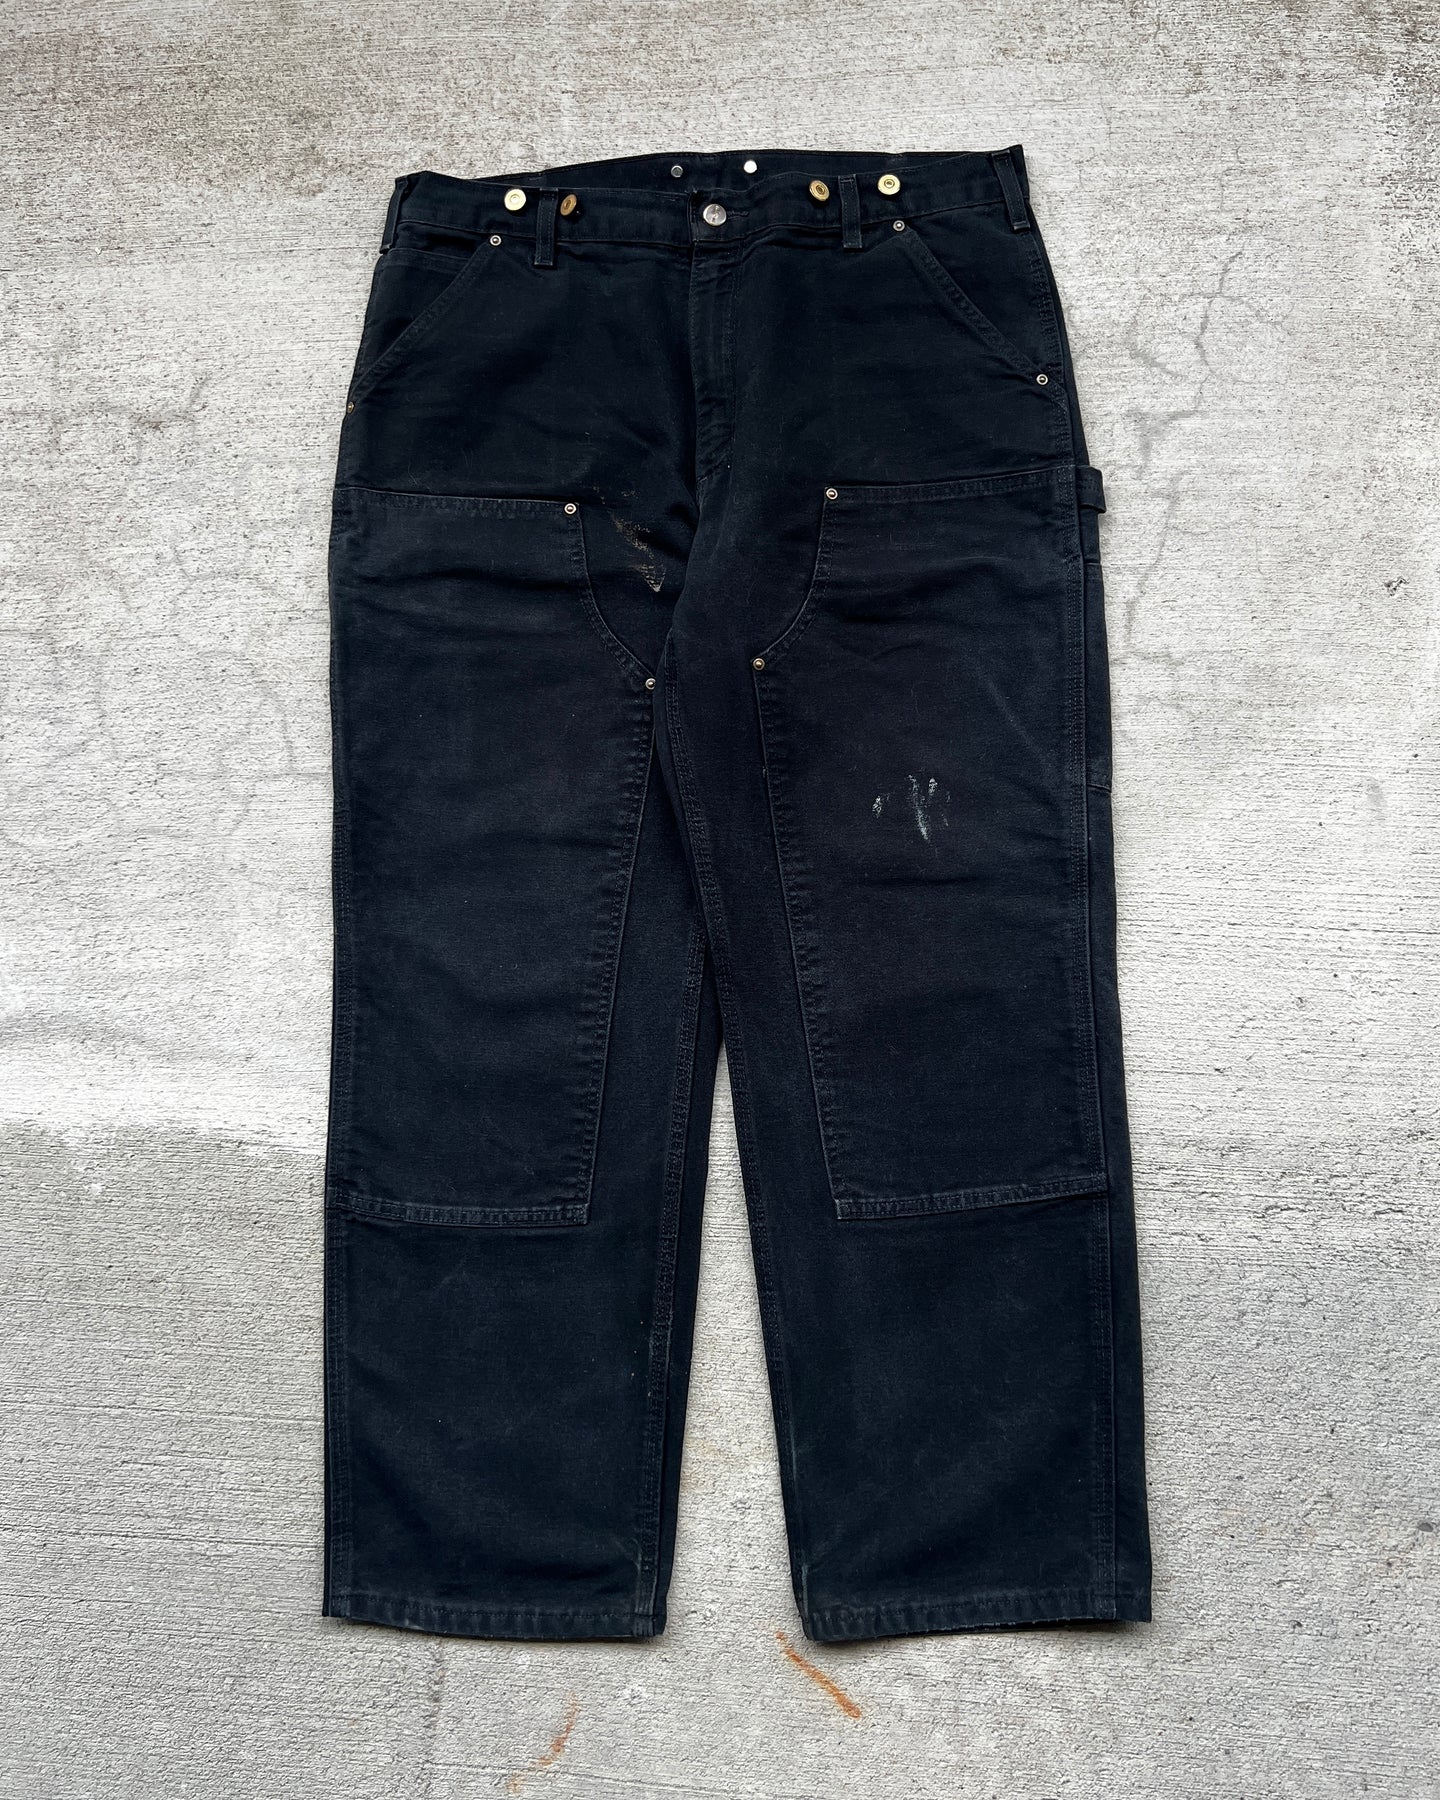 Carhartt Black Double Knee Pants - Size 38 x 30